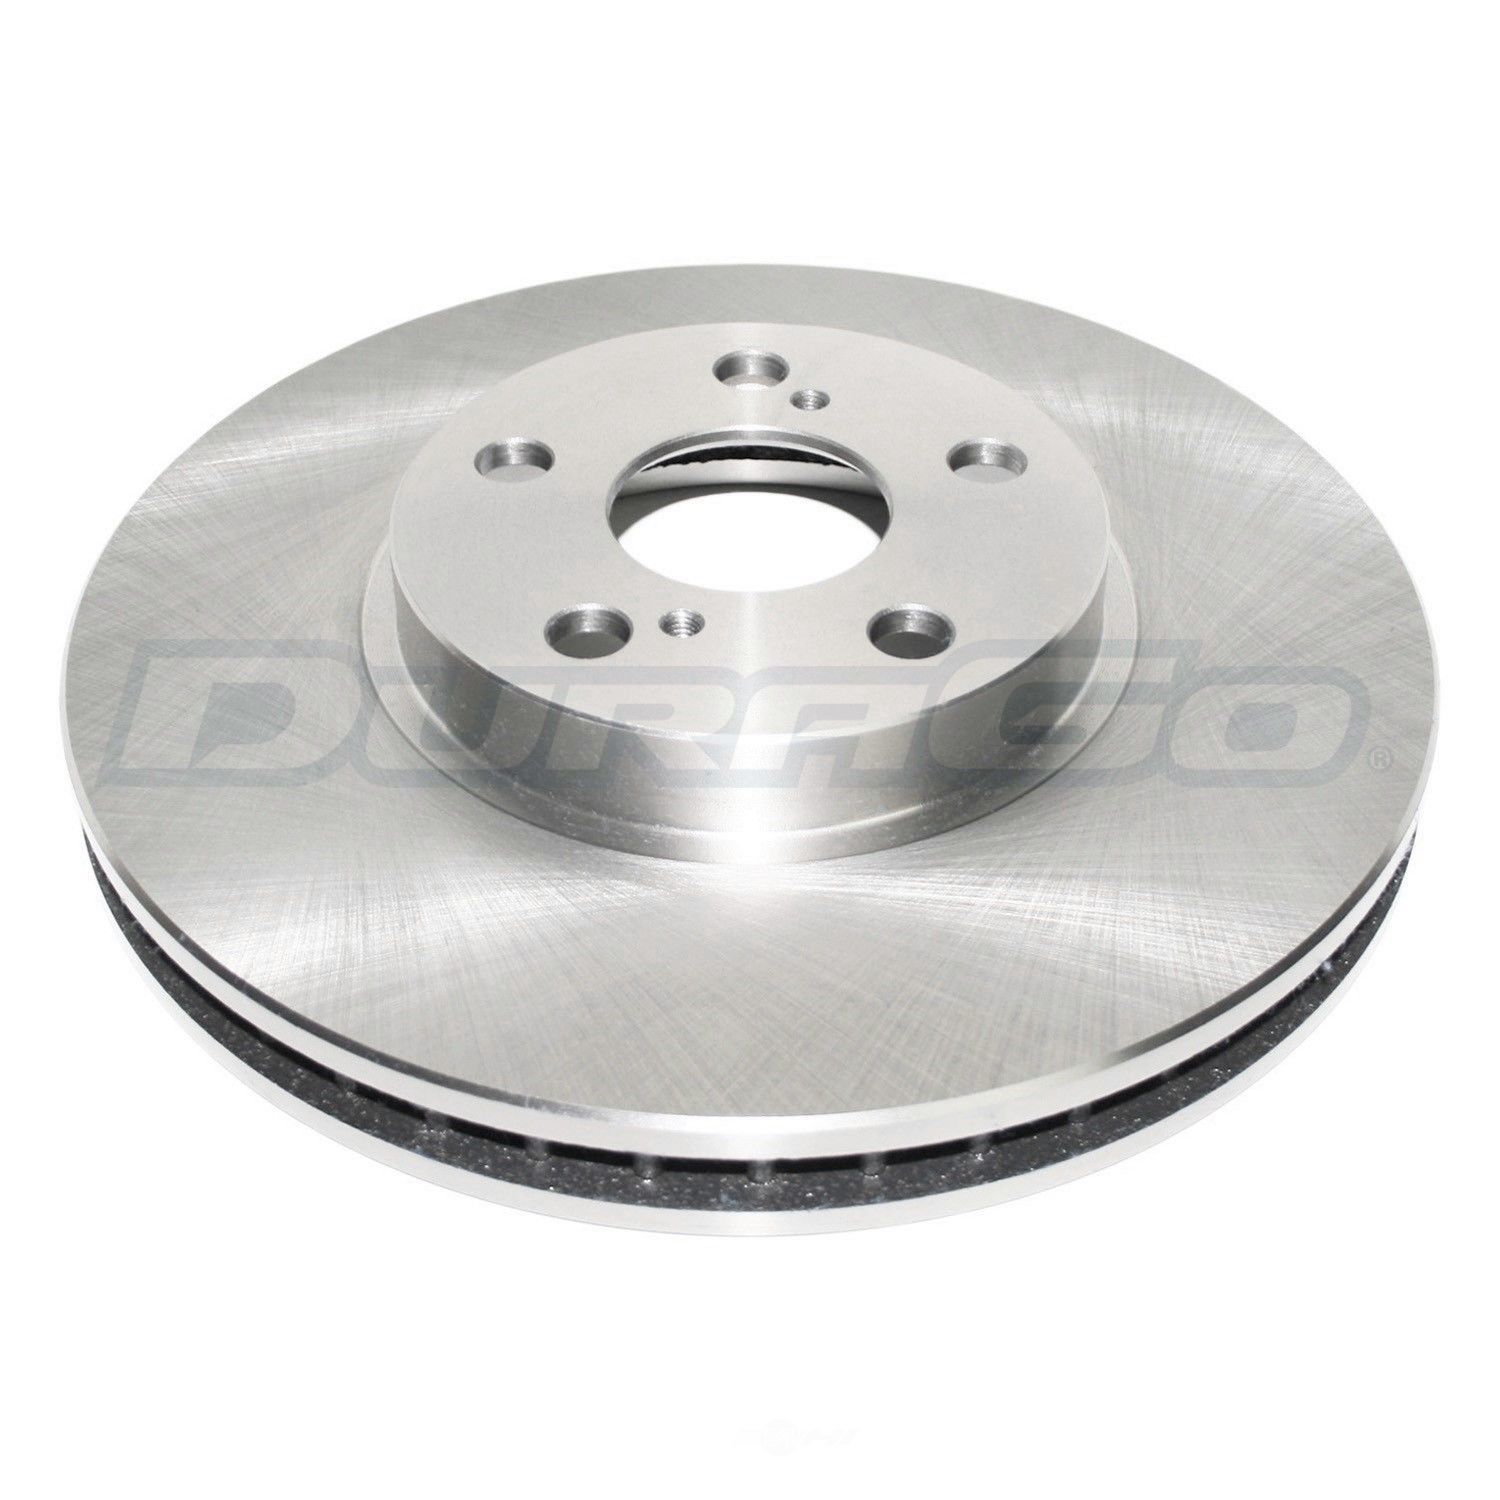 DURAGO - Disc Brake Rotor - D48 BR31189